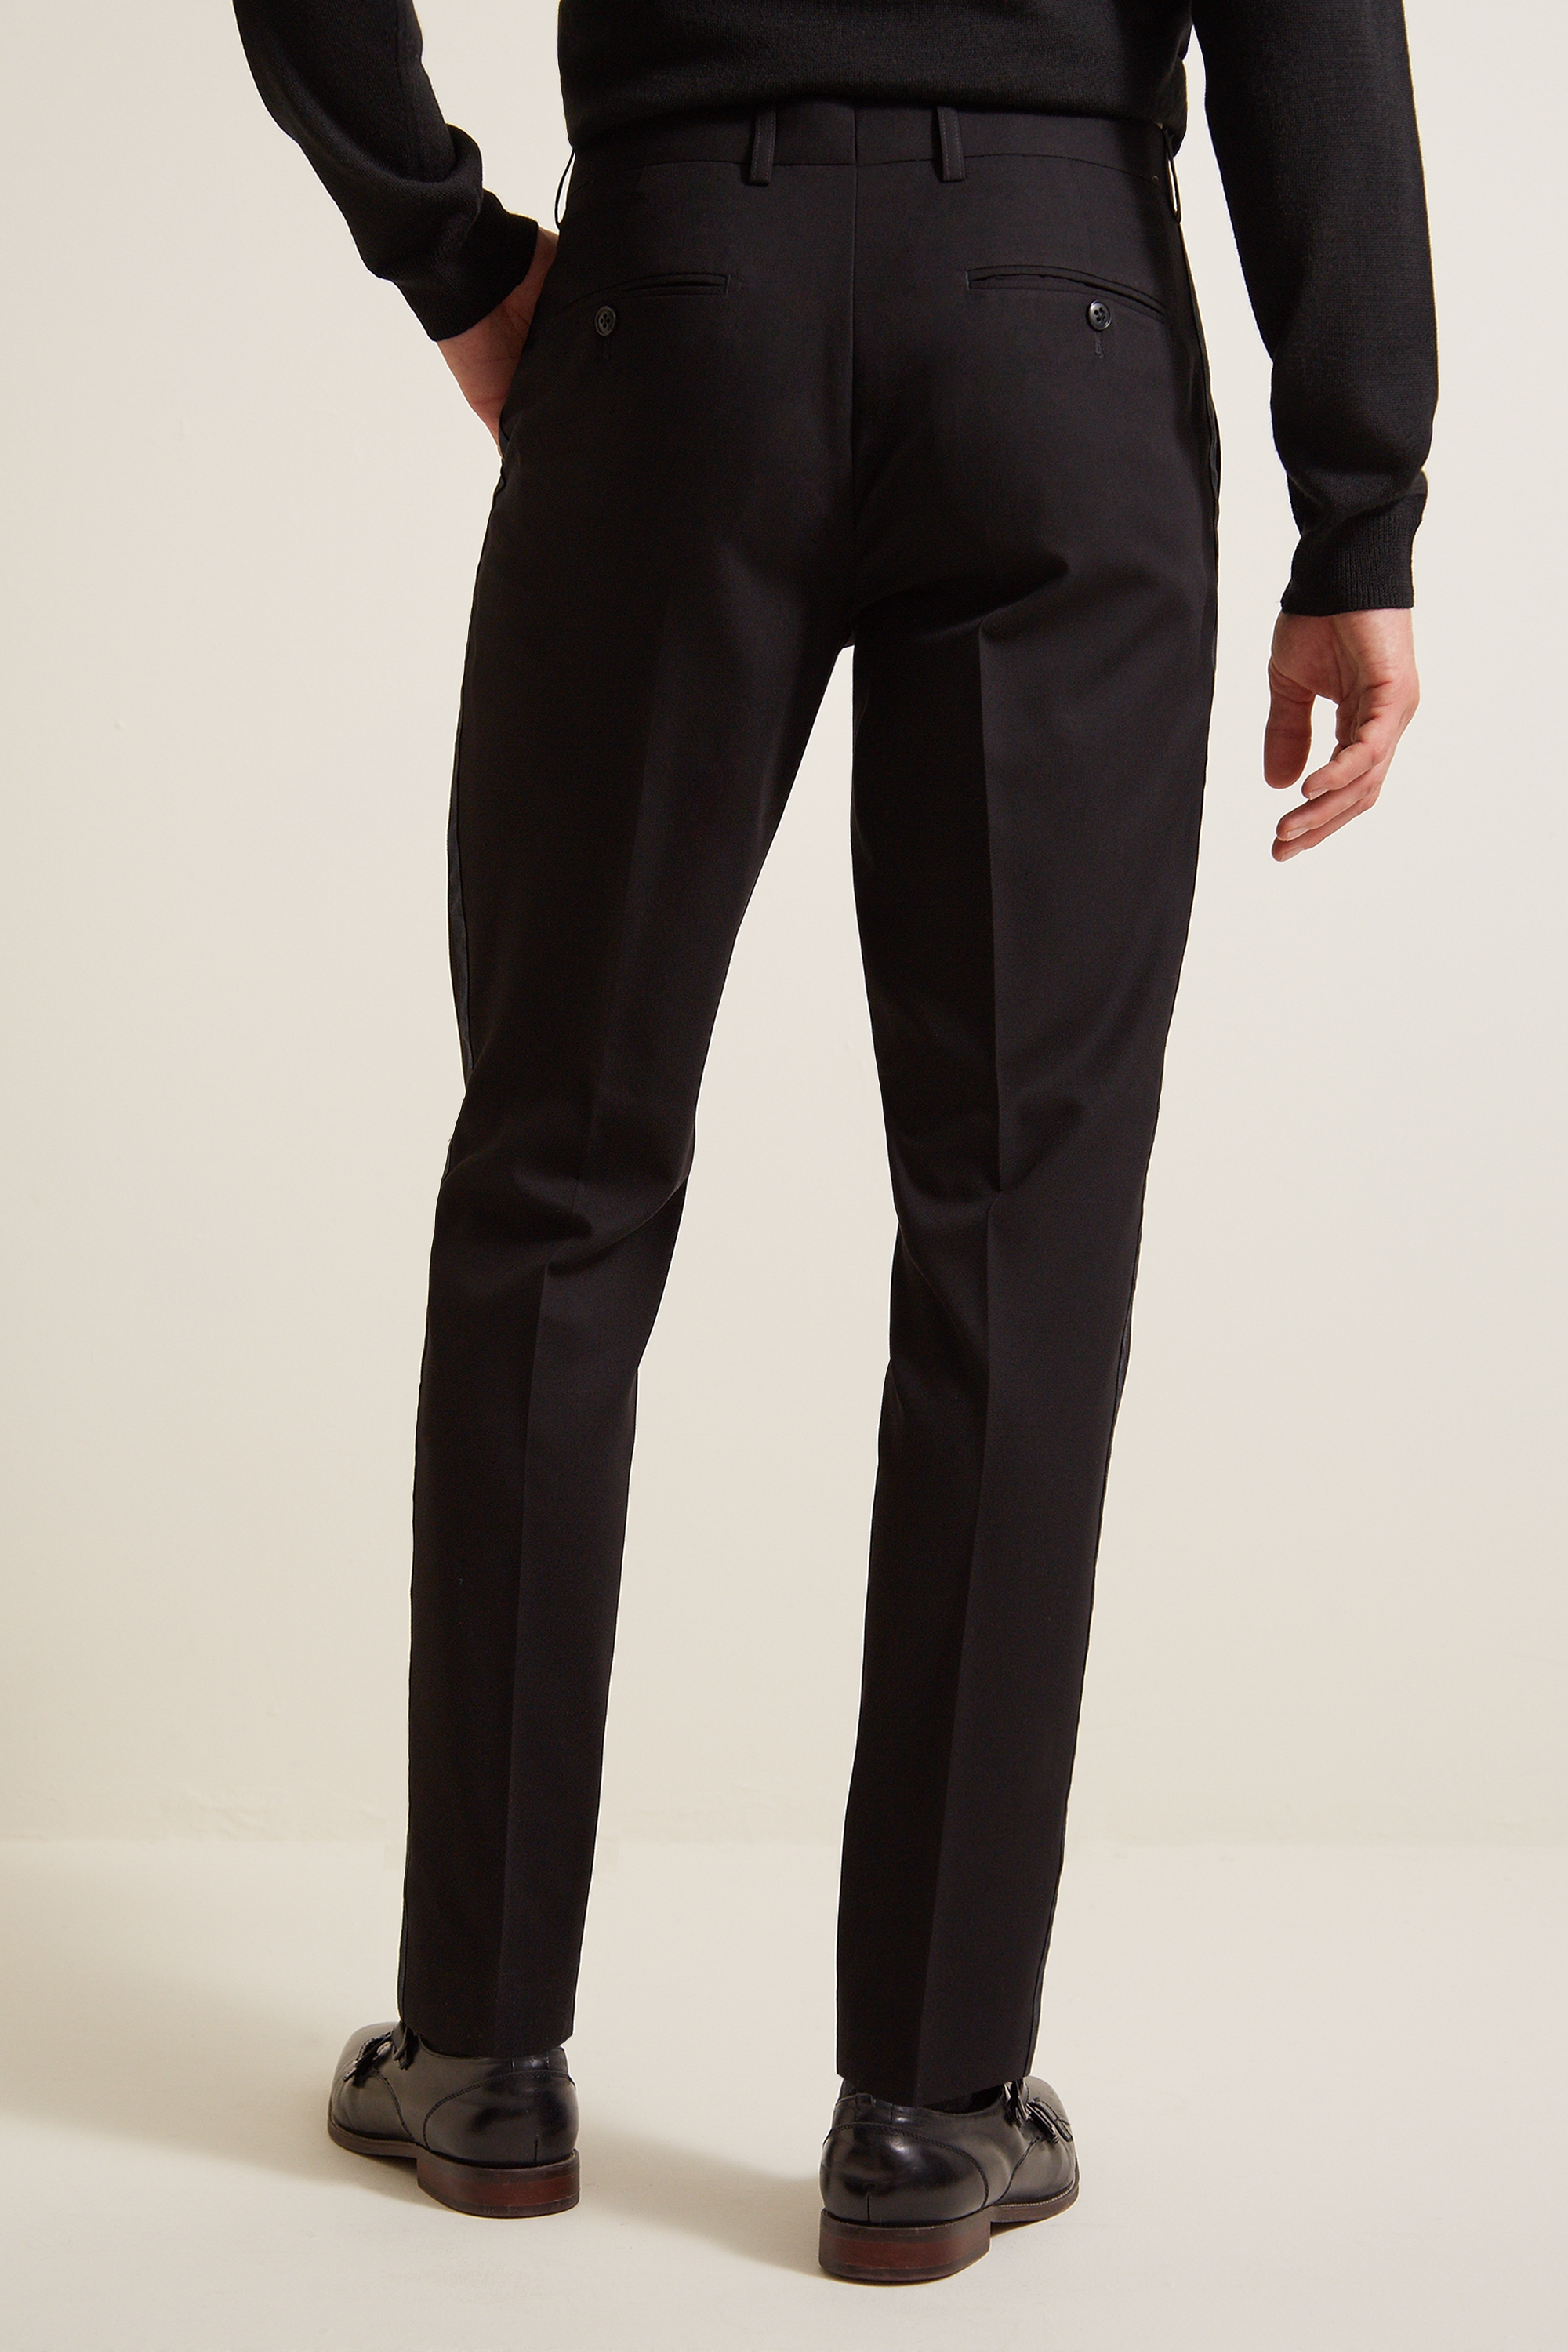 Slim Fit Black & Tartan Tuxedo Trousers | Buy Online at Moss